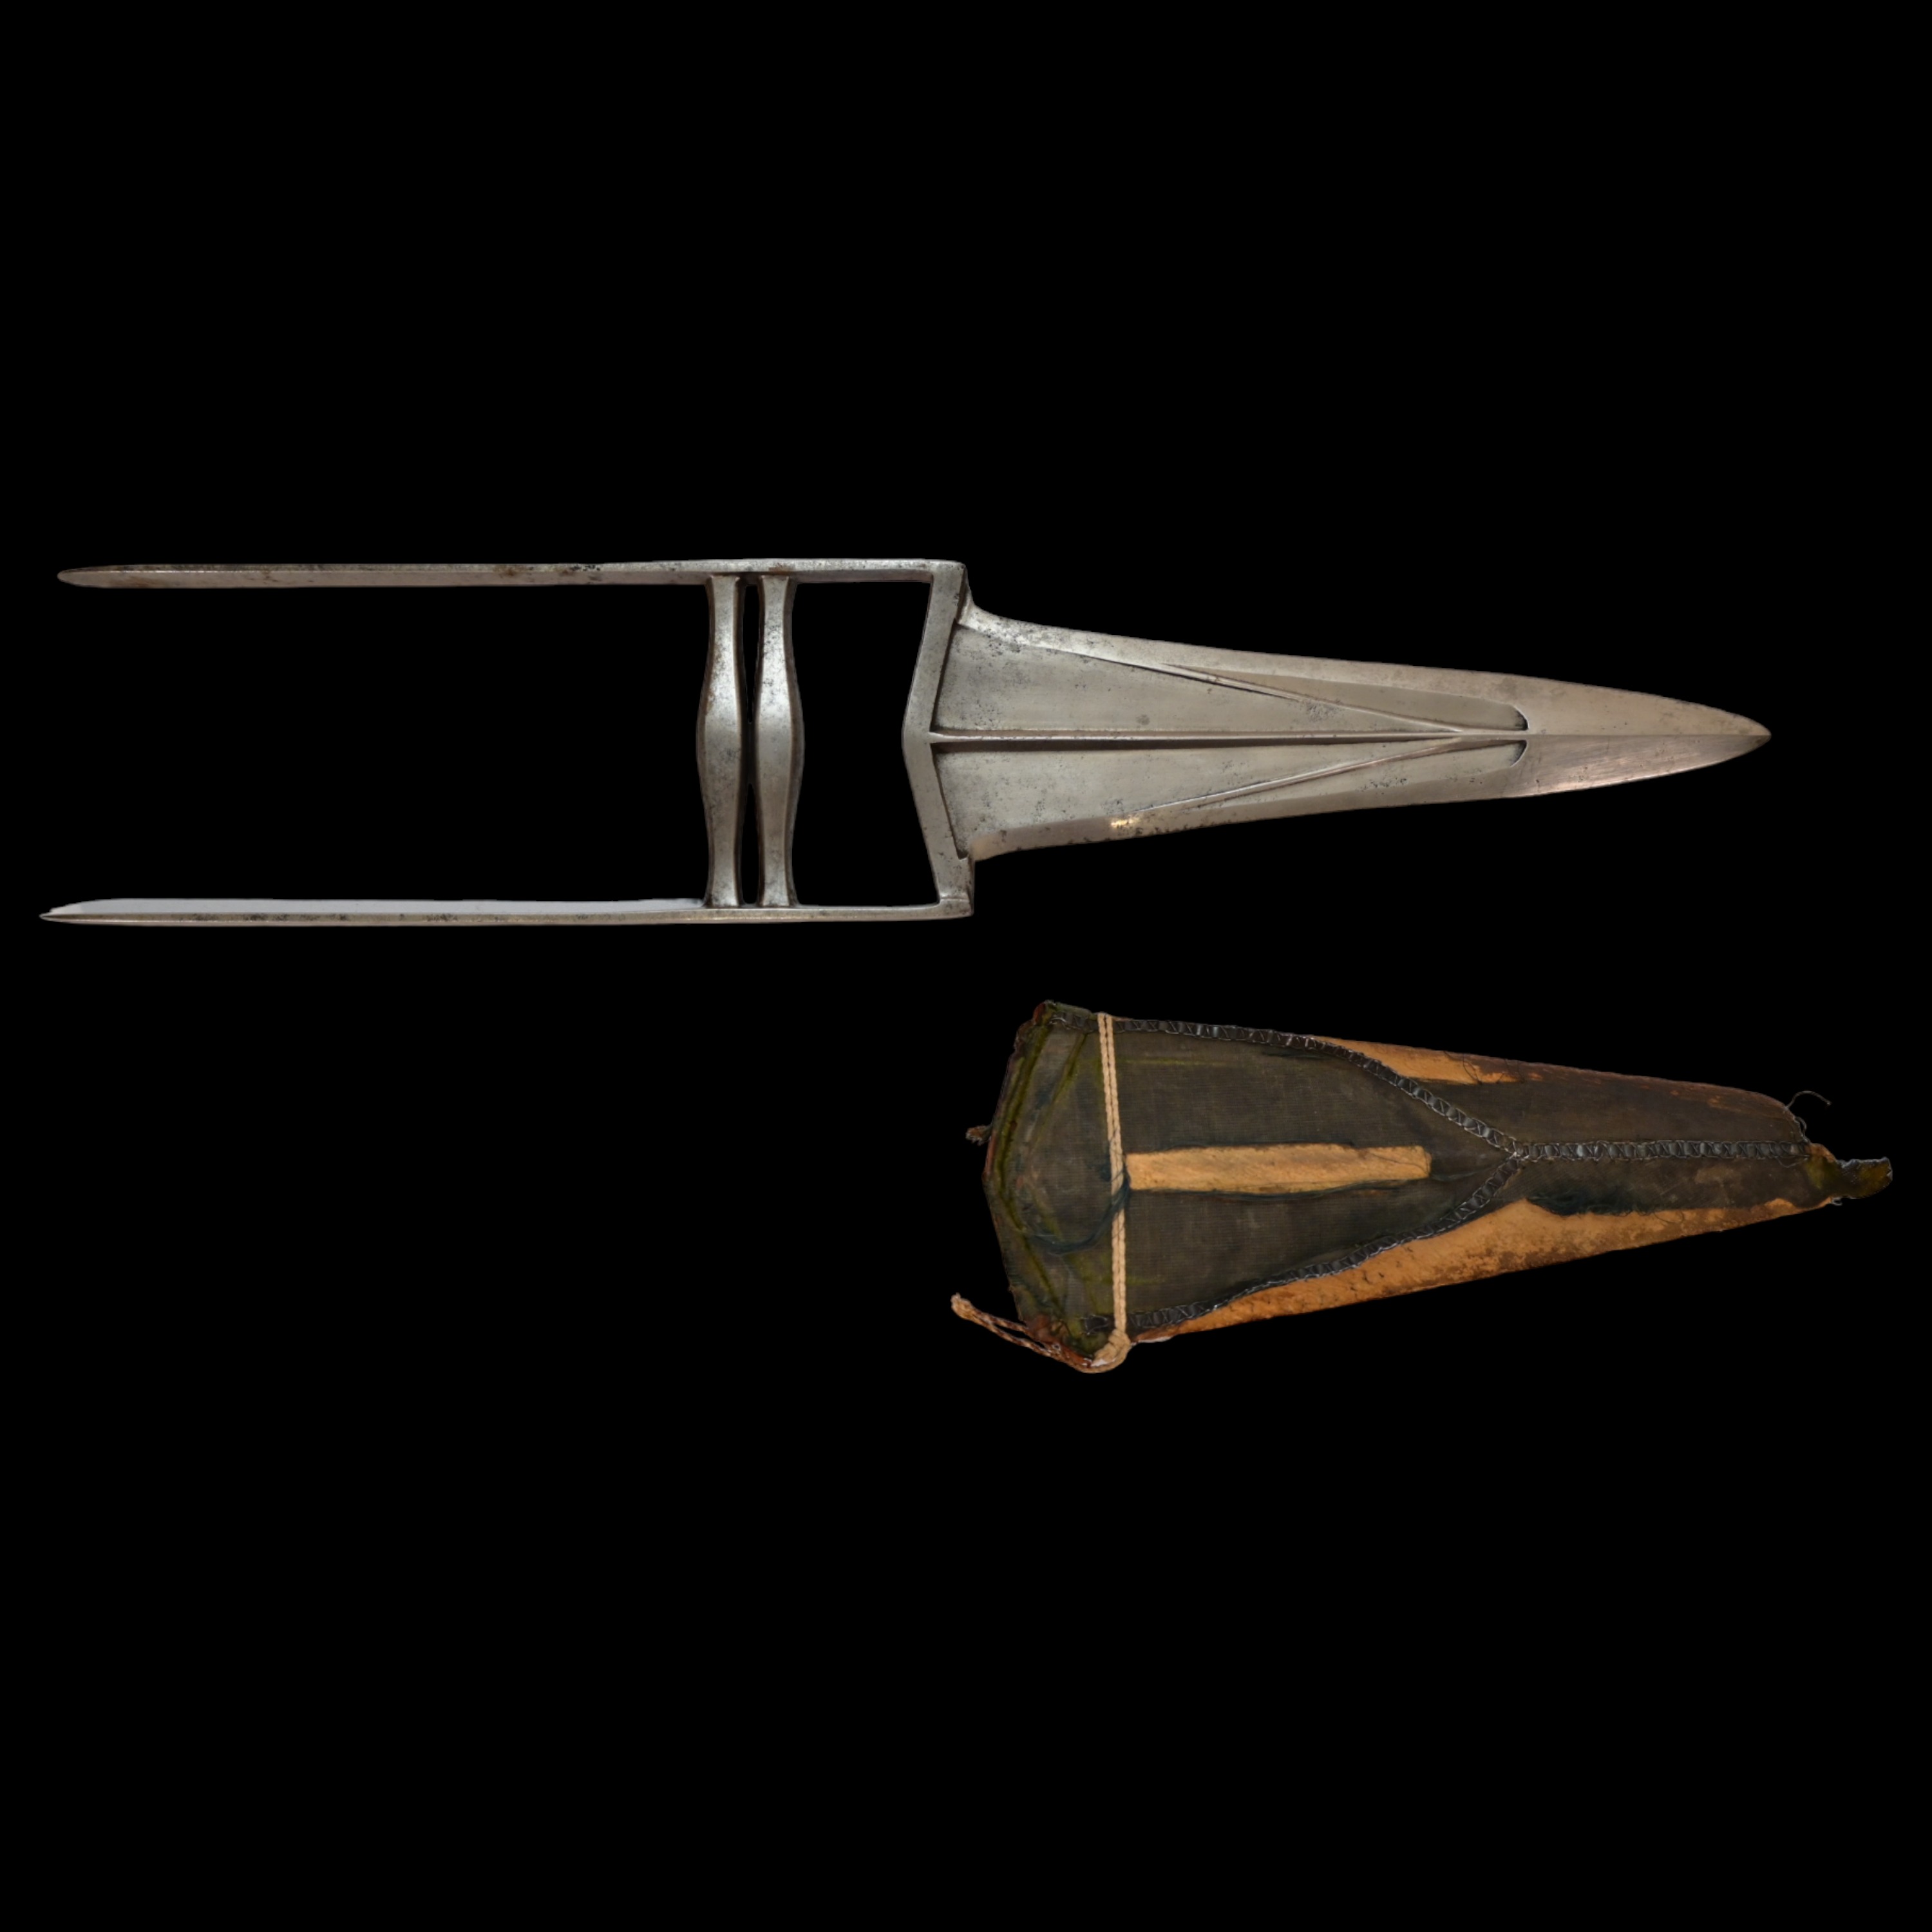 Authentic Indian Katar dagger, 19 century - Image 6 of 9